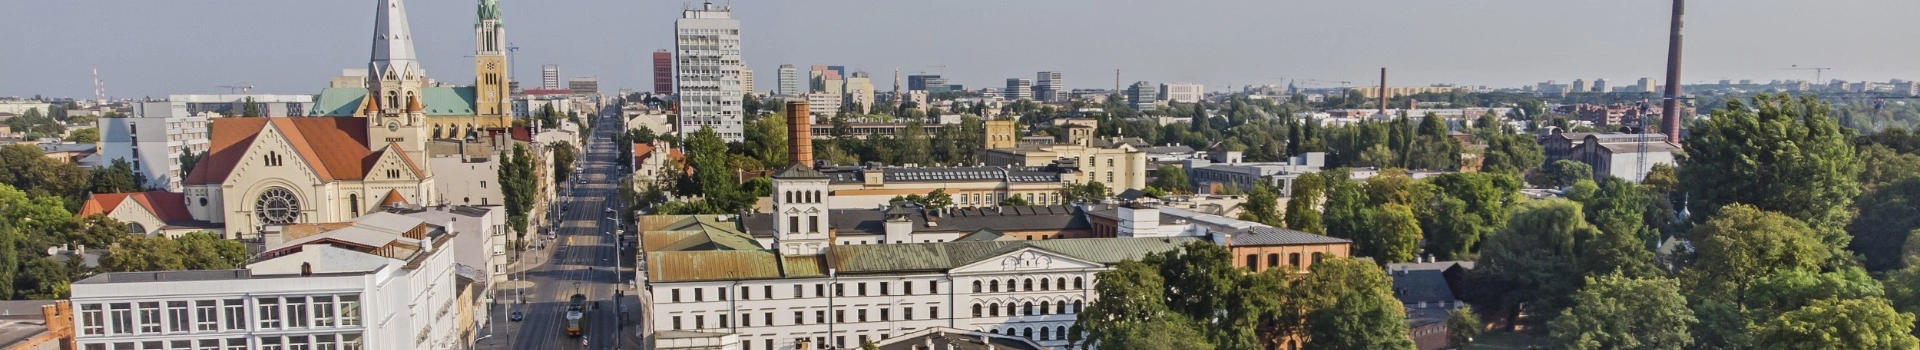 panorama na miasto